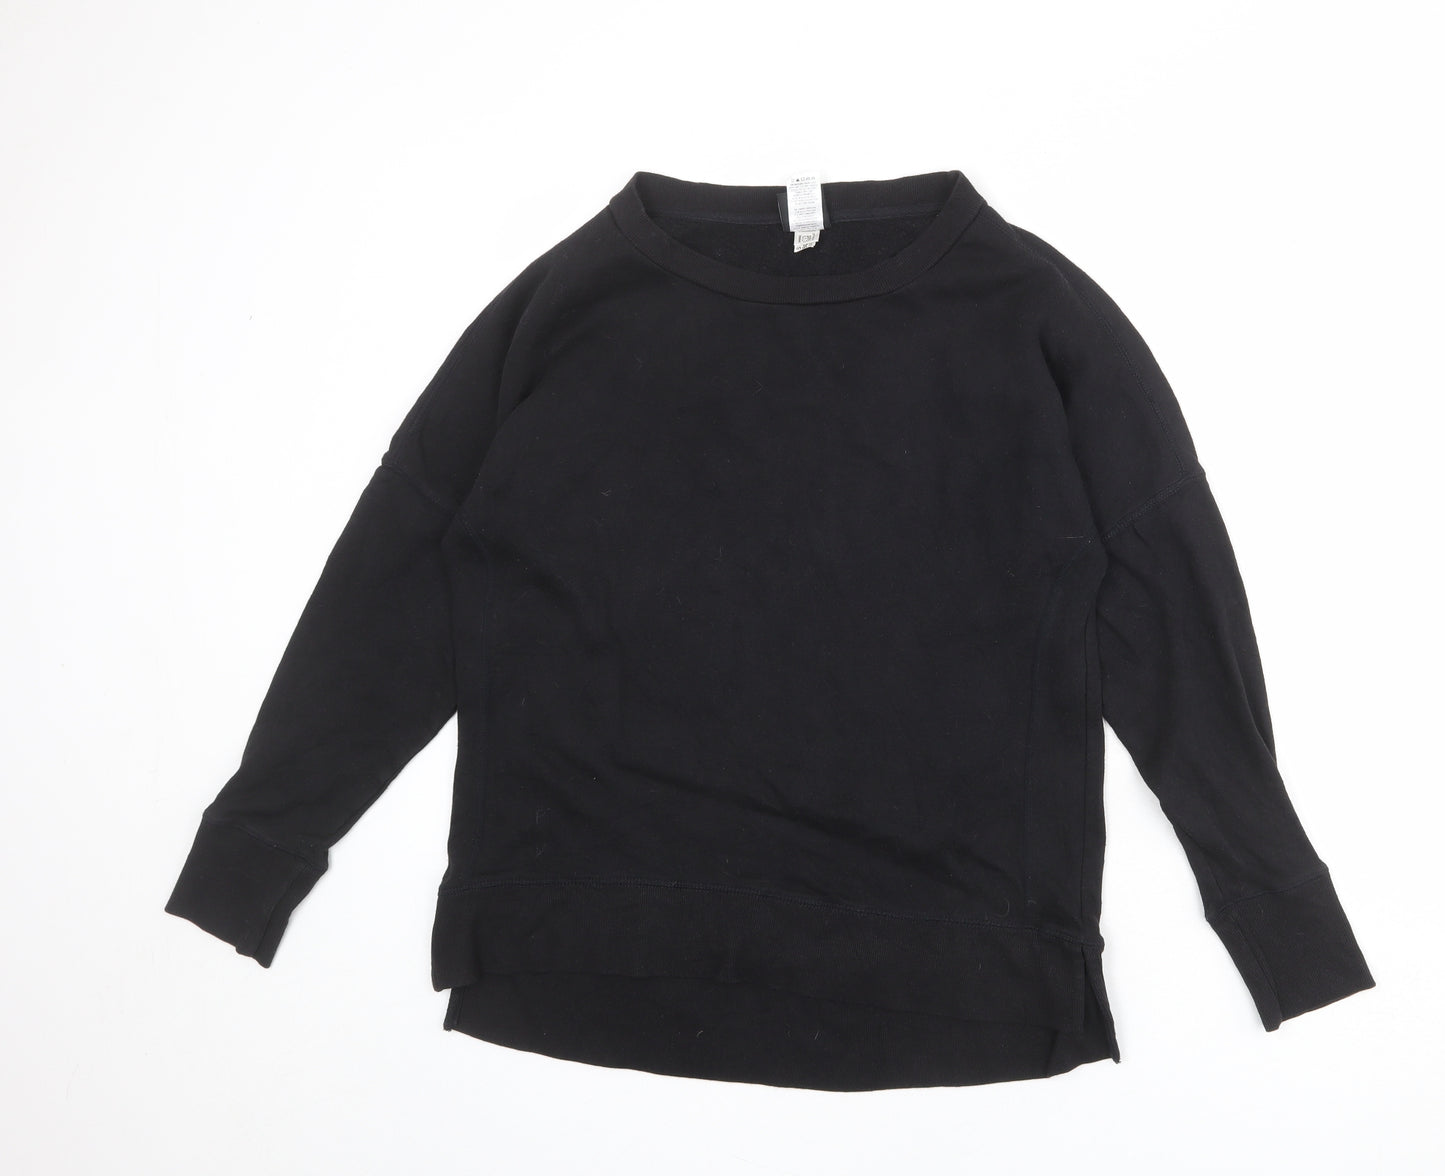 Reebok Womens Black Cotton Pullover Sweatshirt Size M Pullover